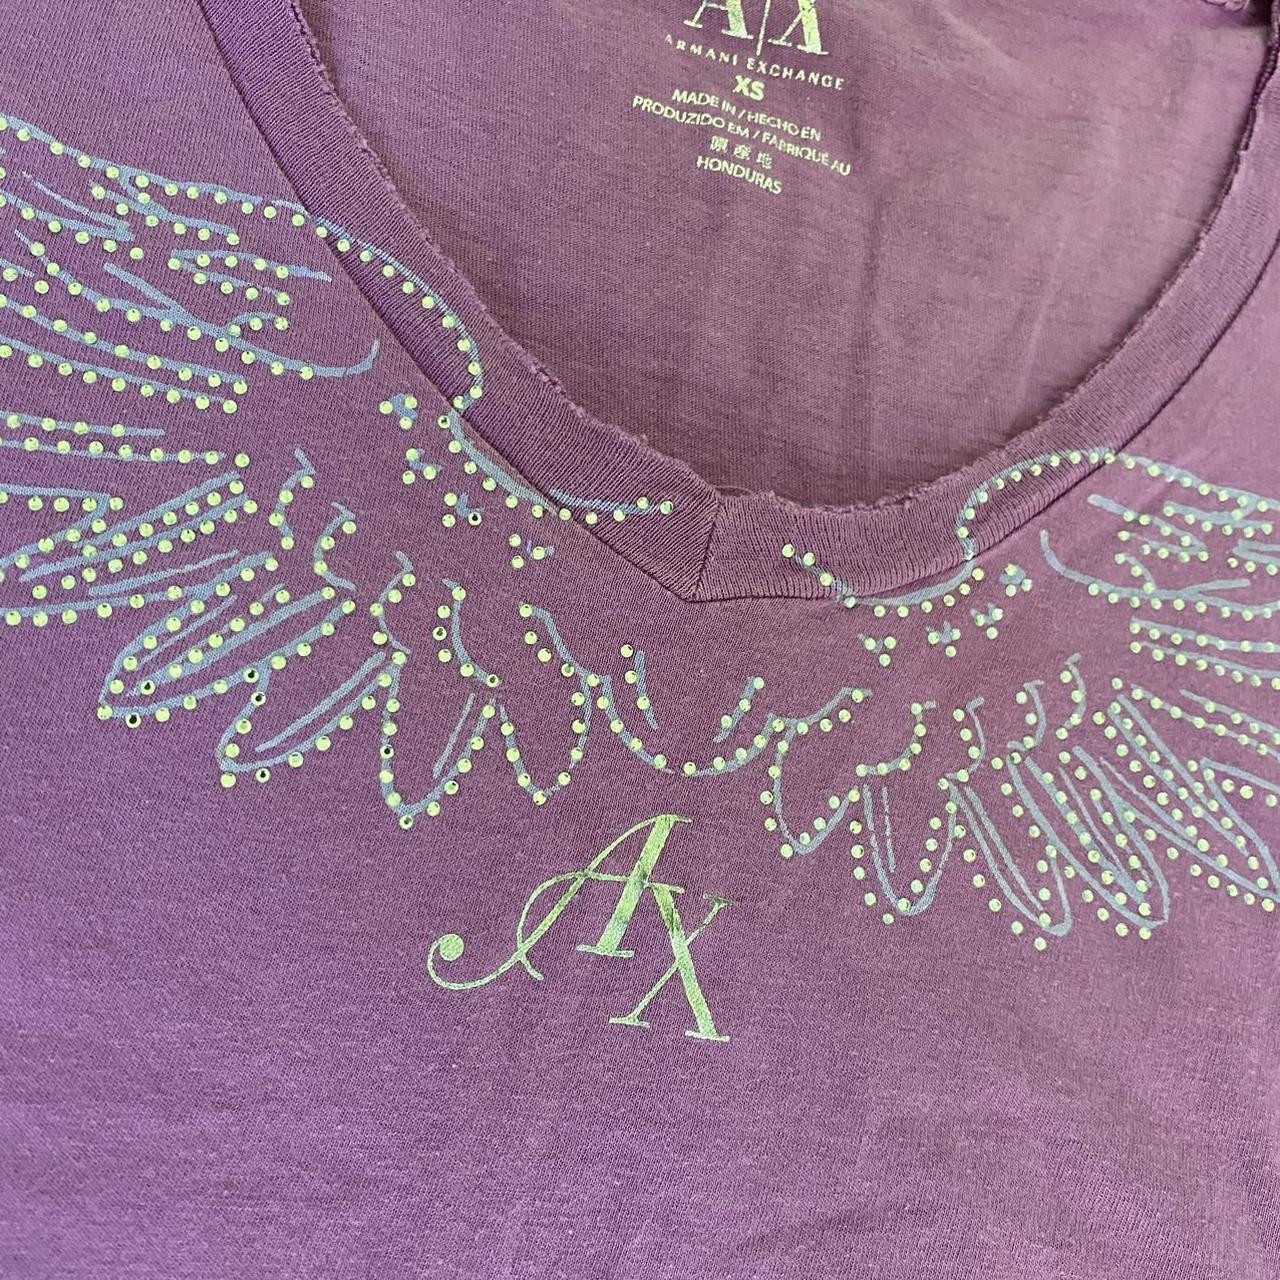 Armani Exchange Women's Purple T-shirt (2)